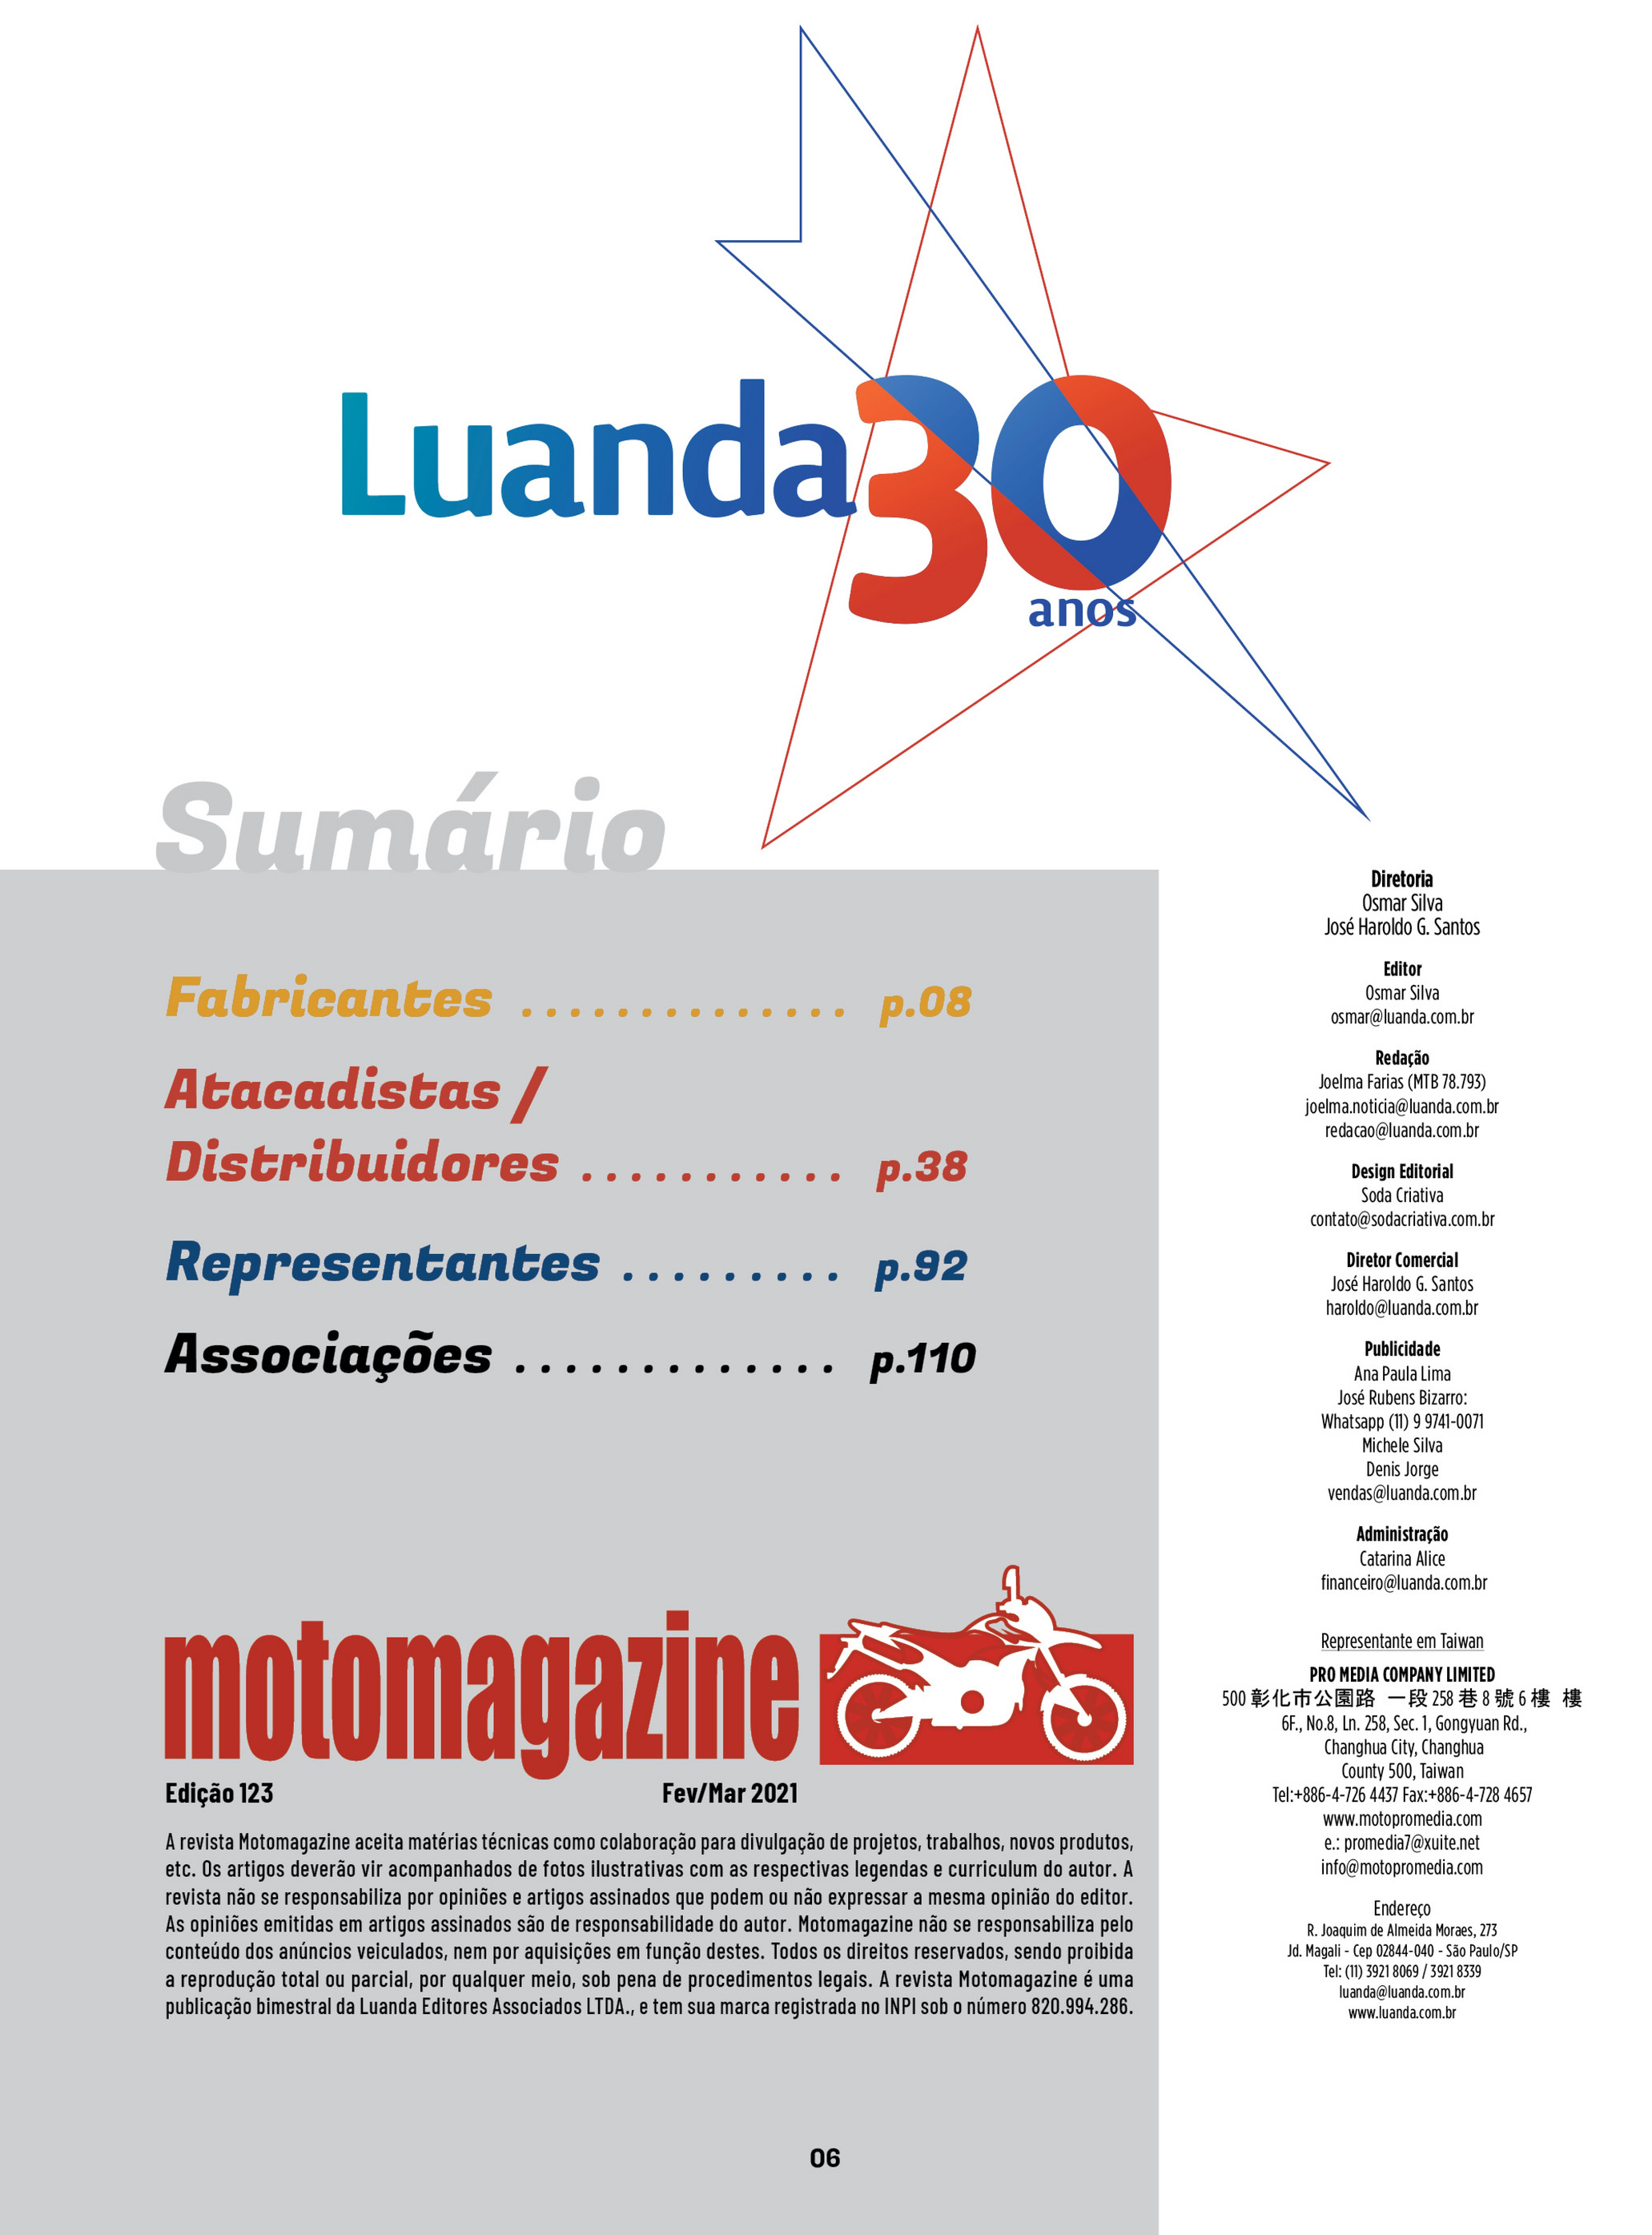 Guia Motomagazine 2015 by Luanda Editores - Issuu